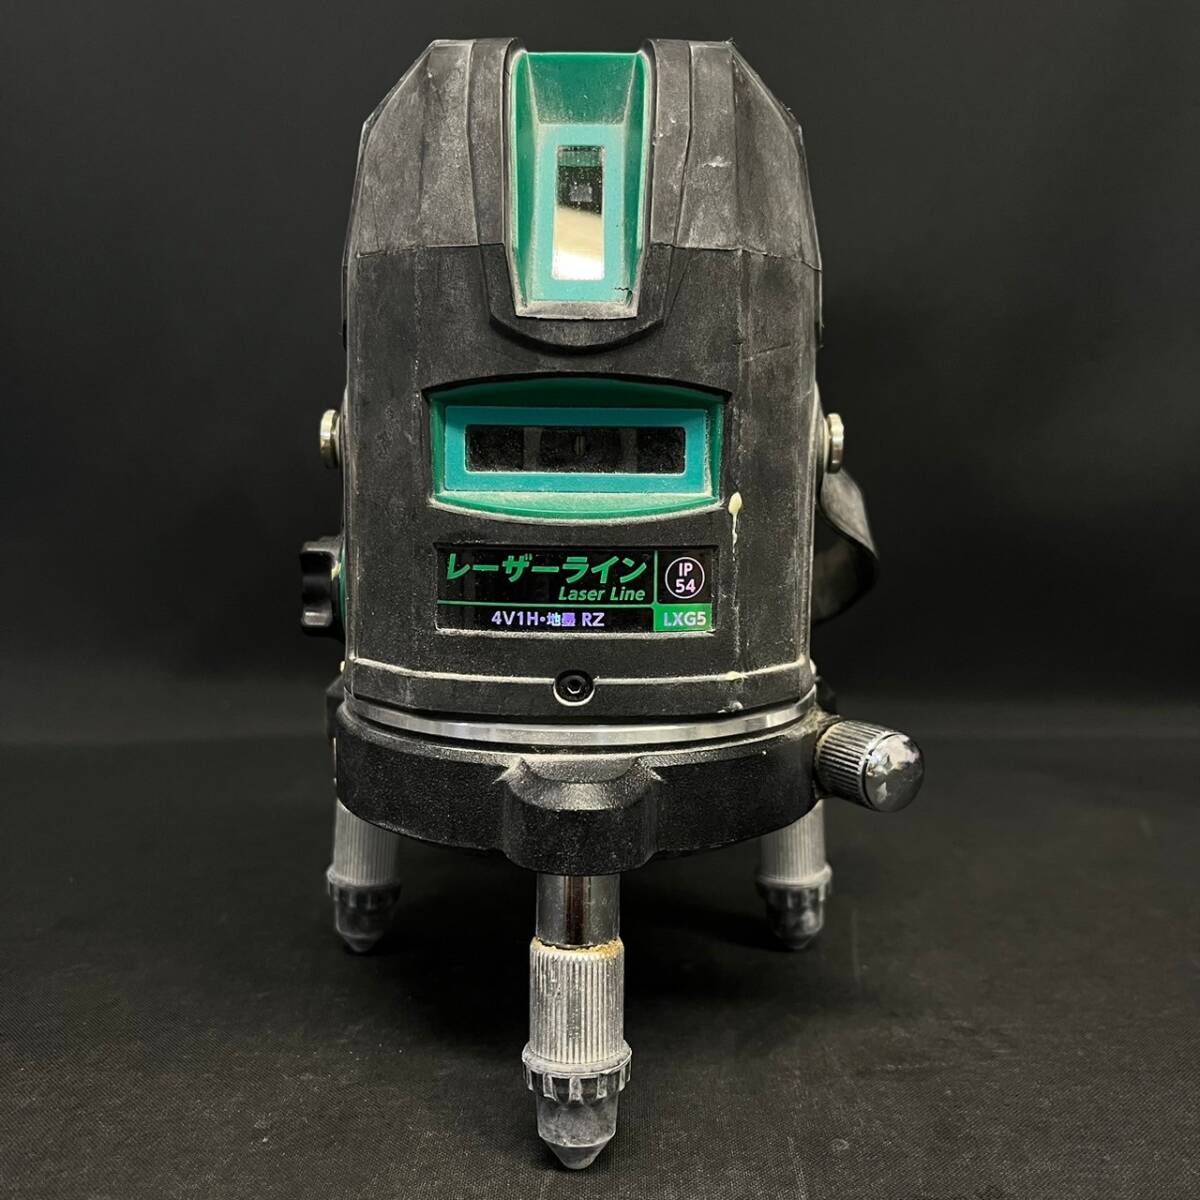 BCd170R 80 RETZLINK RZ-LXG5 Laser Line レーザーライン 墨出器 4V1H地墨 乾電池式 グリーンレーザー ケース付き 工具 測定器の画像5